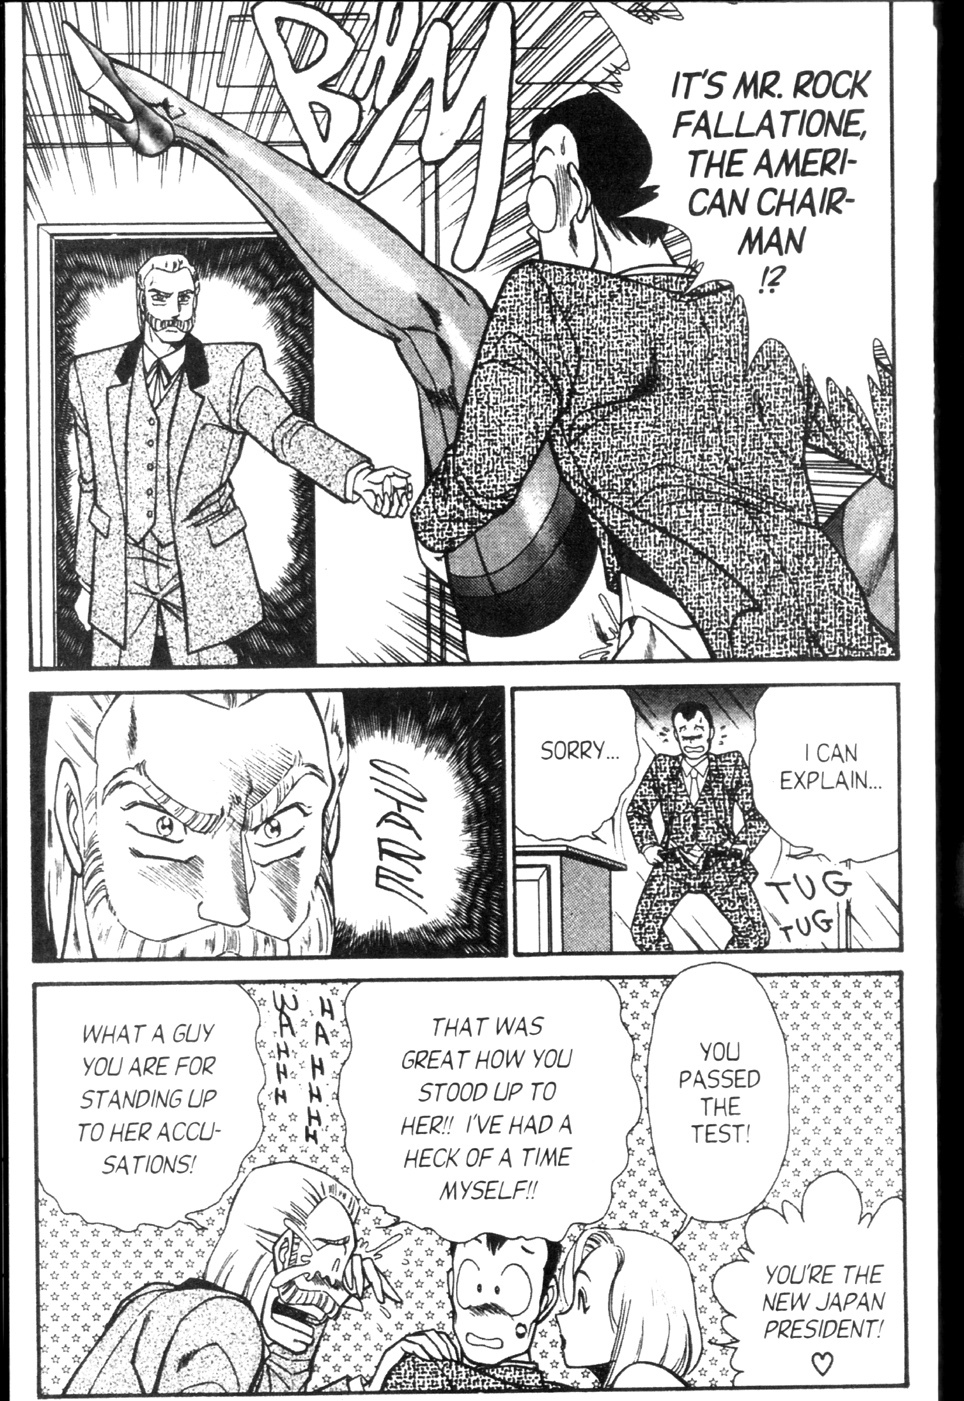 Ogenki Clinic Vol.6 59 hentai manga